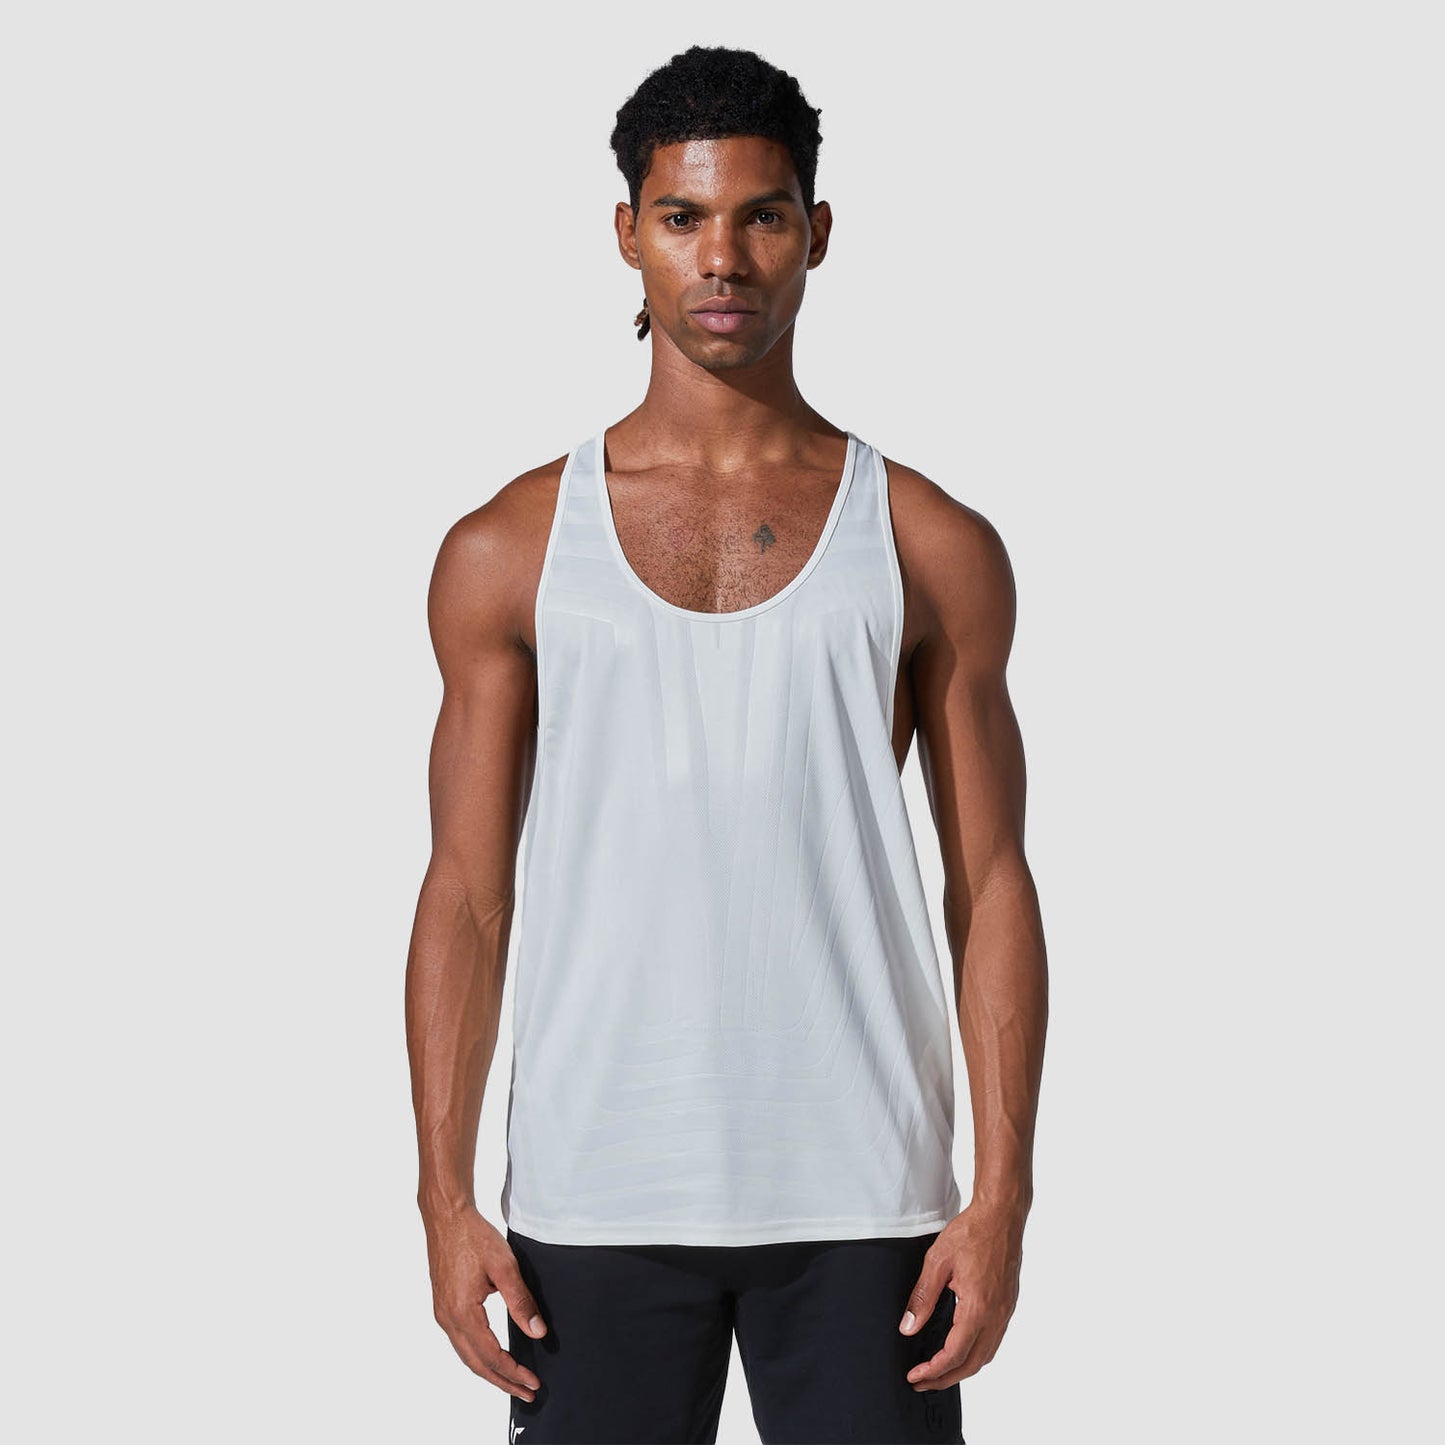 squatwolf-gym-wear-graphic-wave-eyes-stringer-white-workout-stringers-vests-for-men